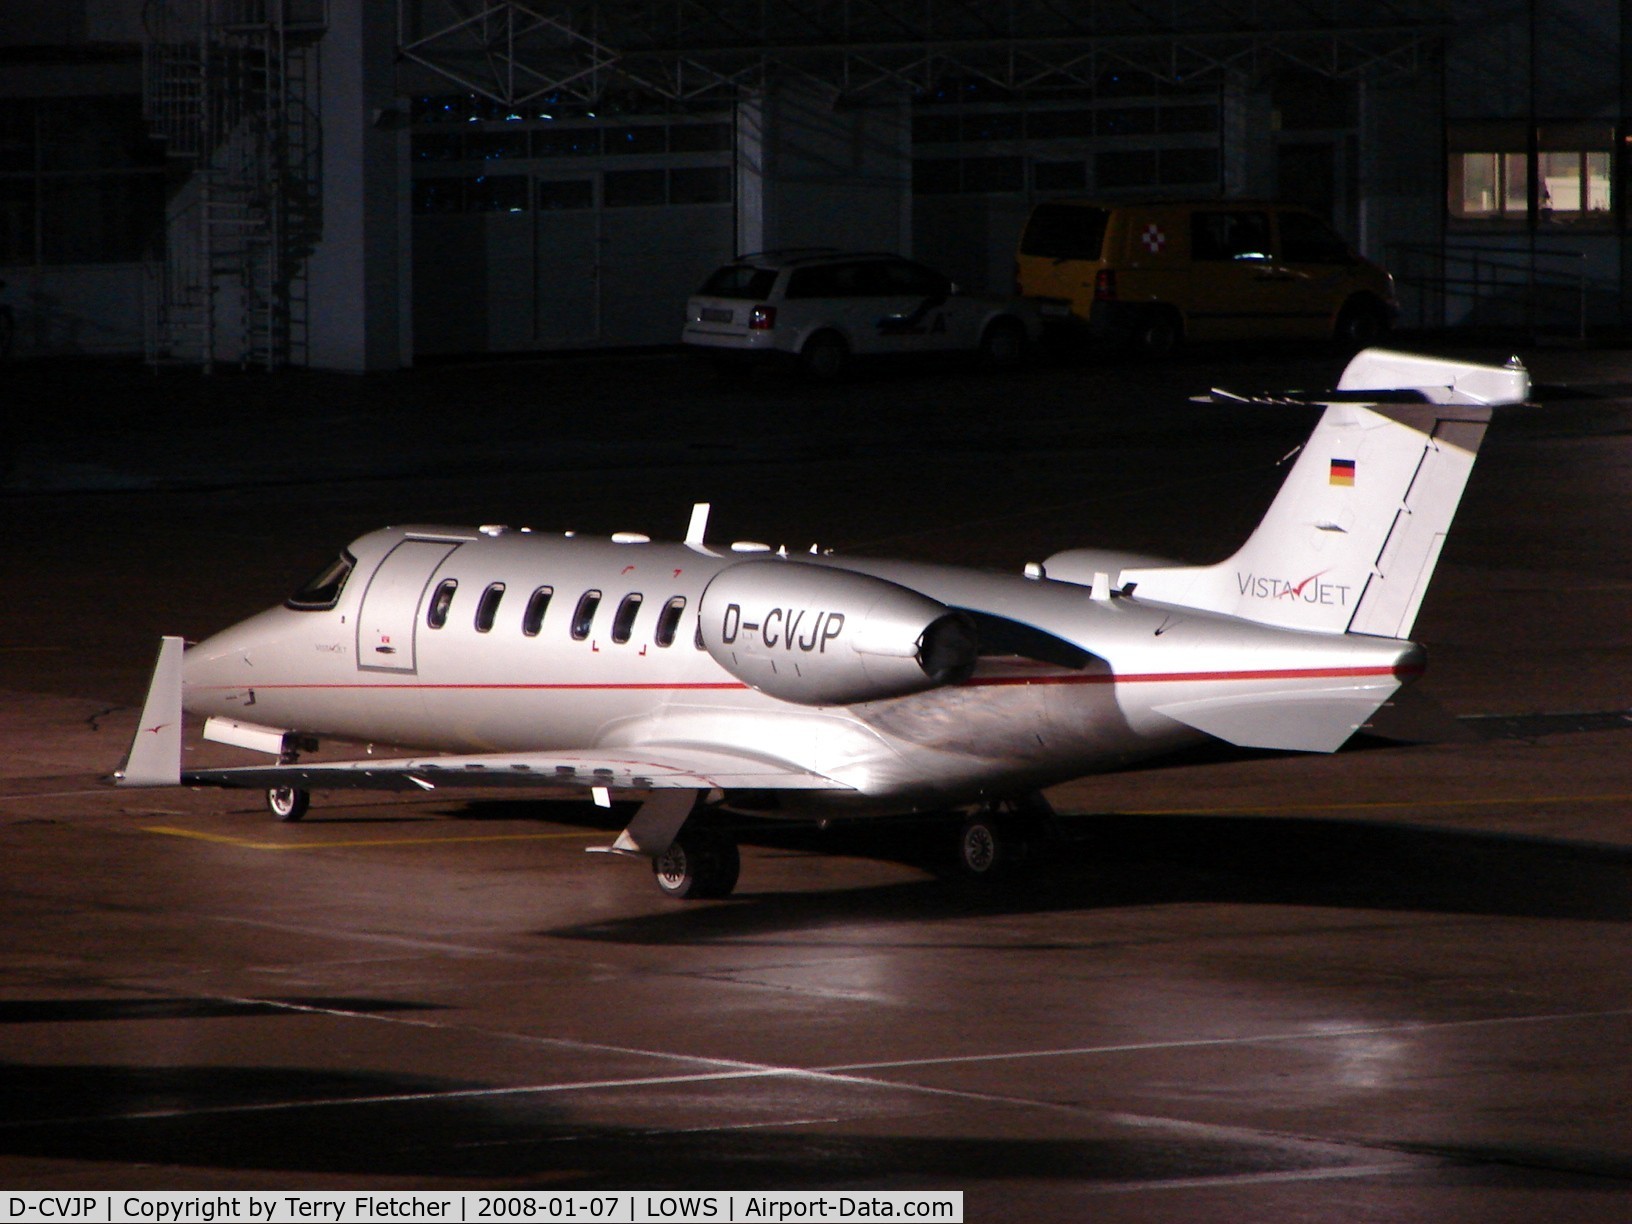 D-CVJP, 2007 Learjet 40 C/N 45-2079, Vistajet's Lear 40 was a nightstopper at Salzburg Airport